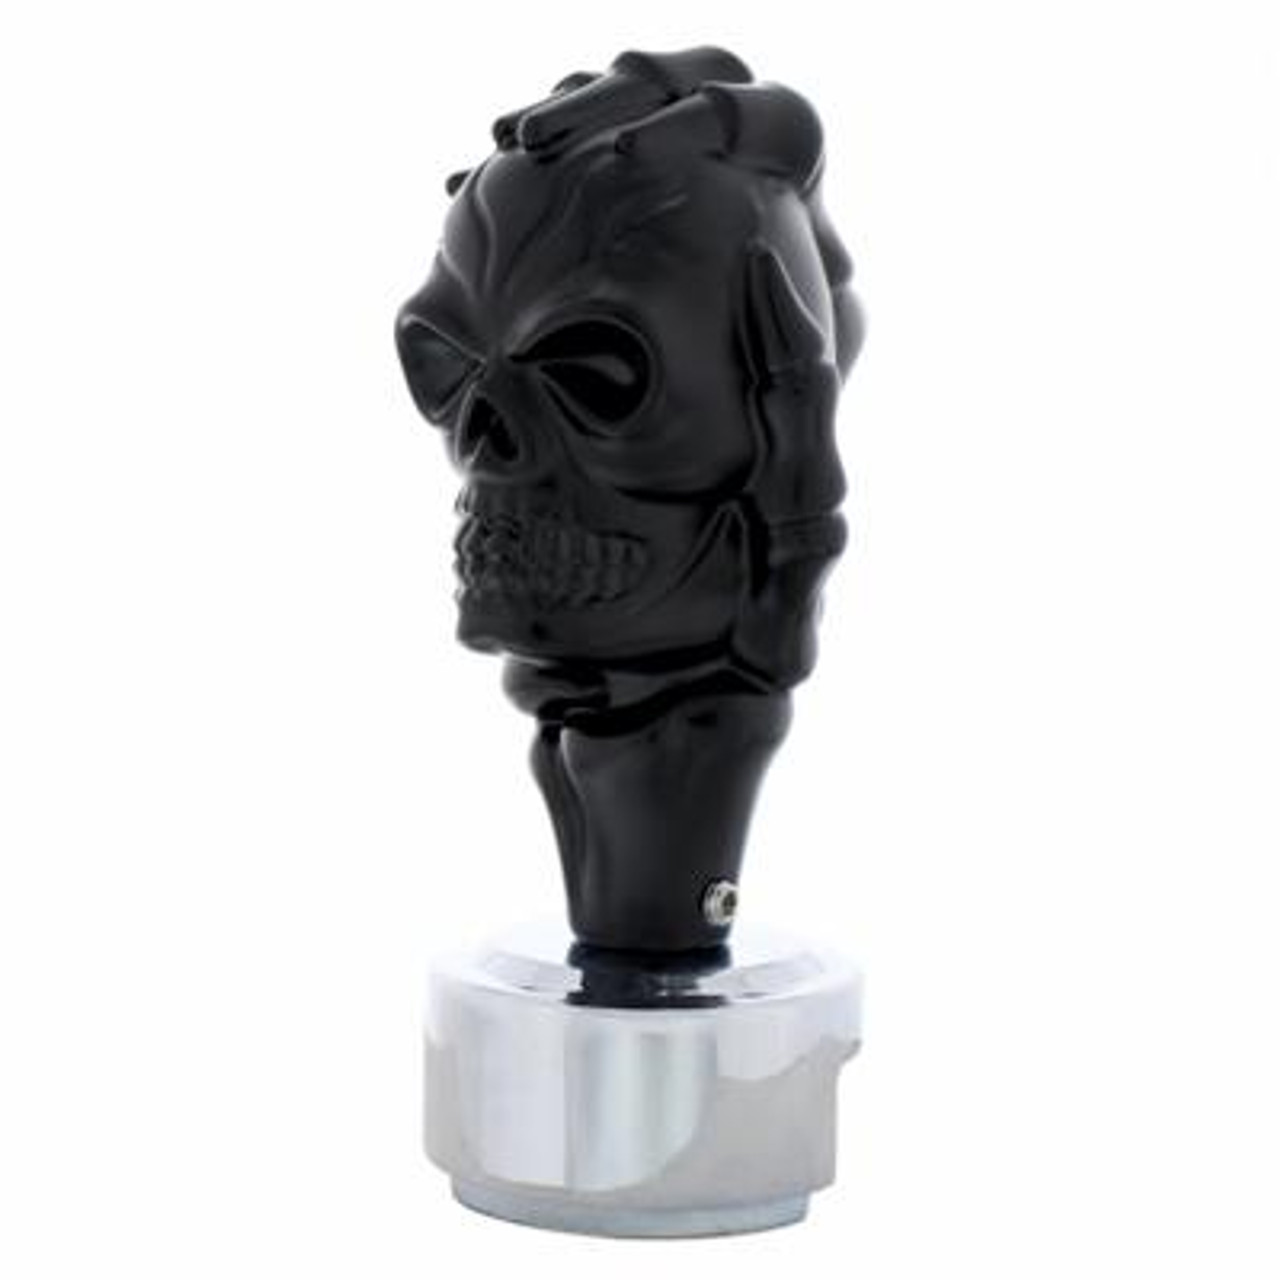 Black Skull Gearshift Knob With 13/15/18 Speed Adapter